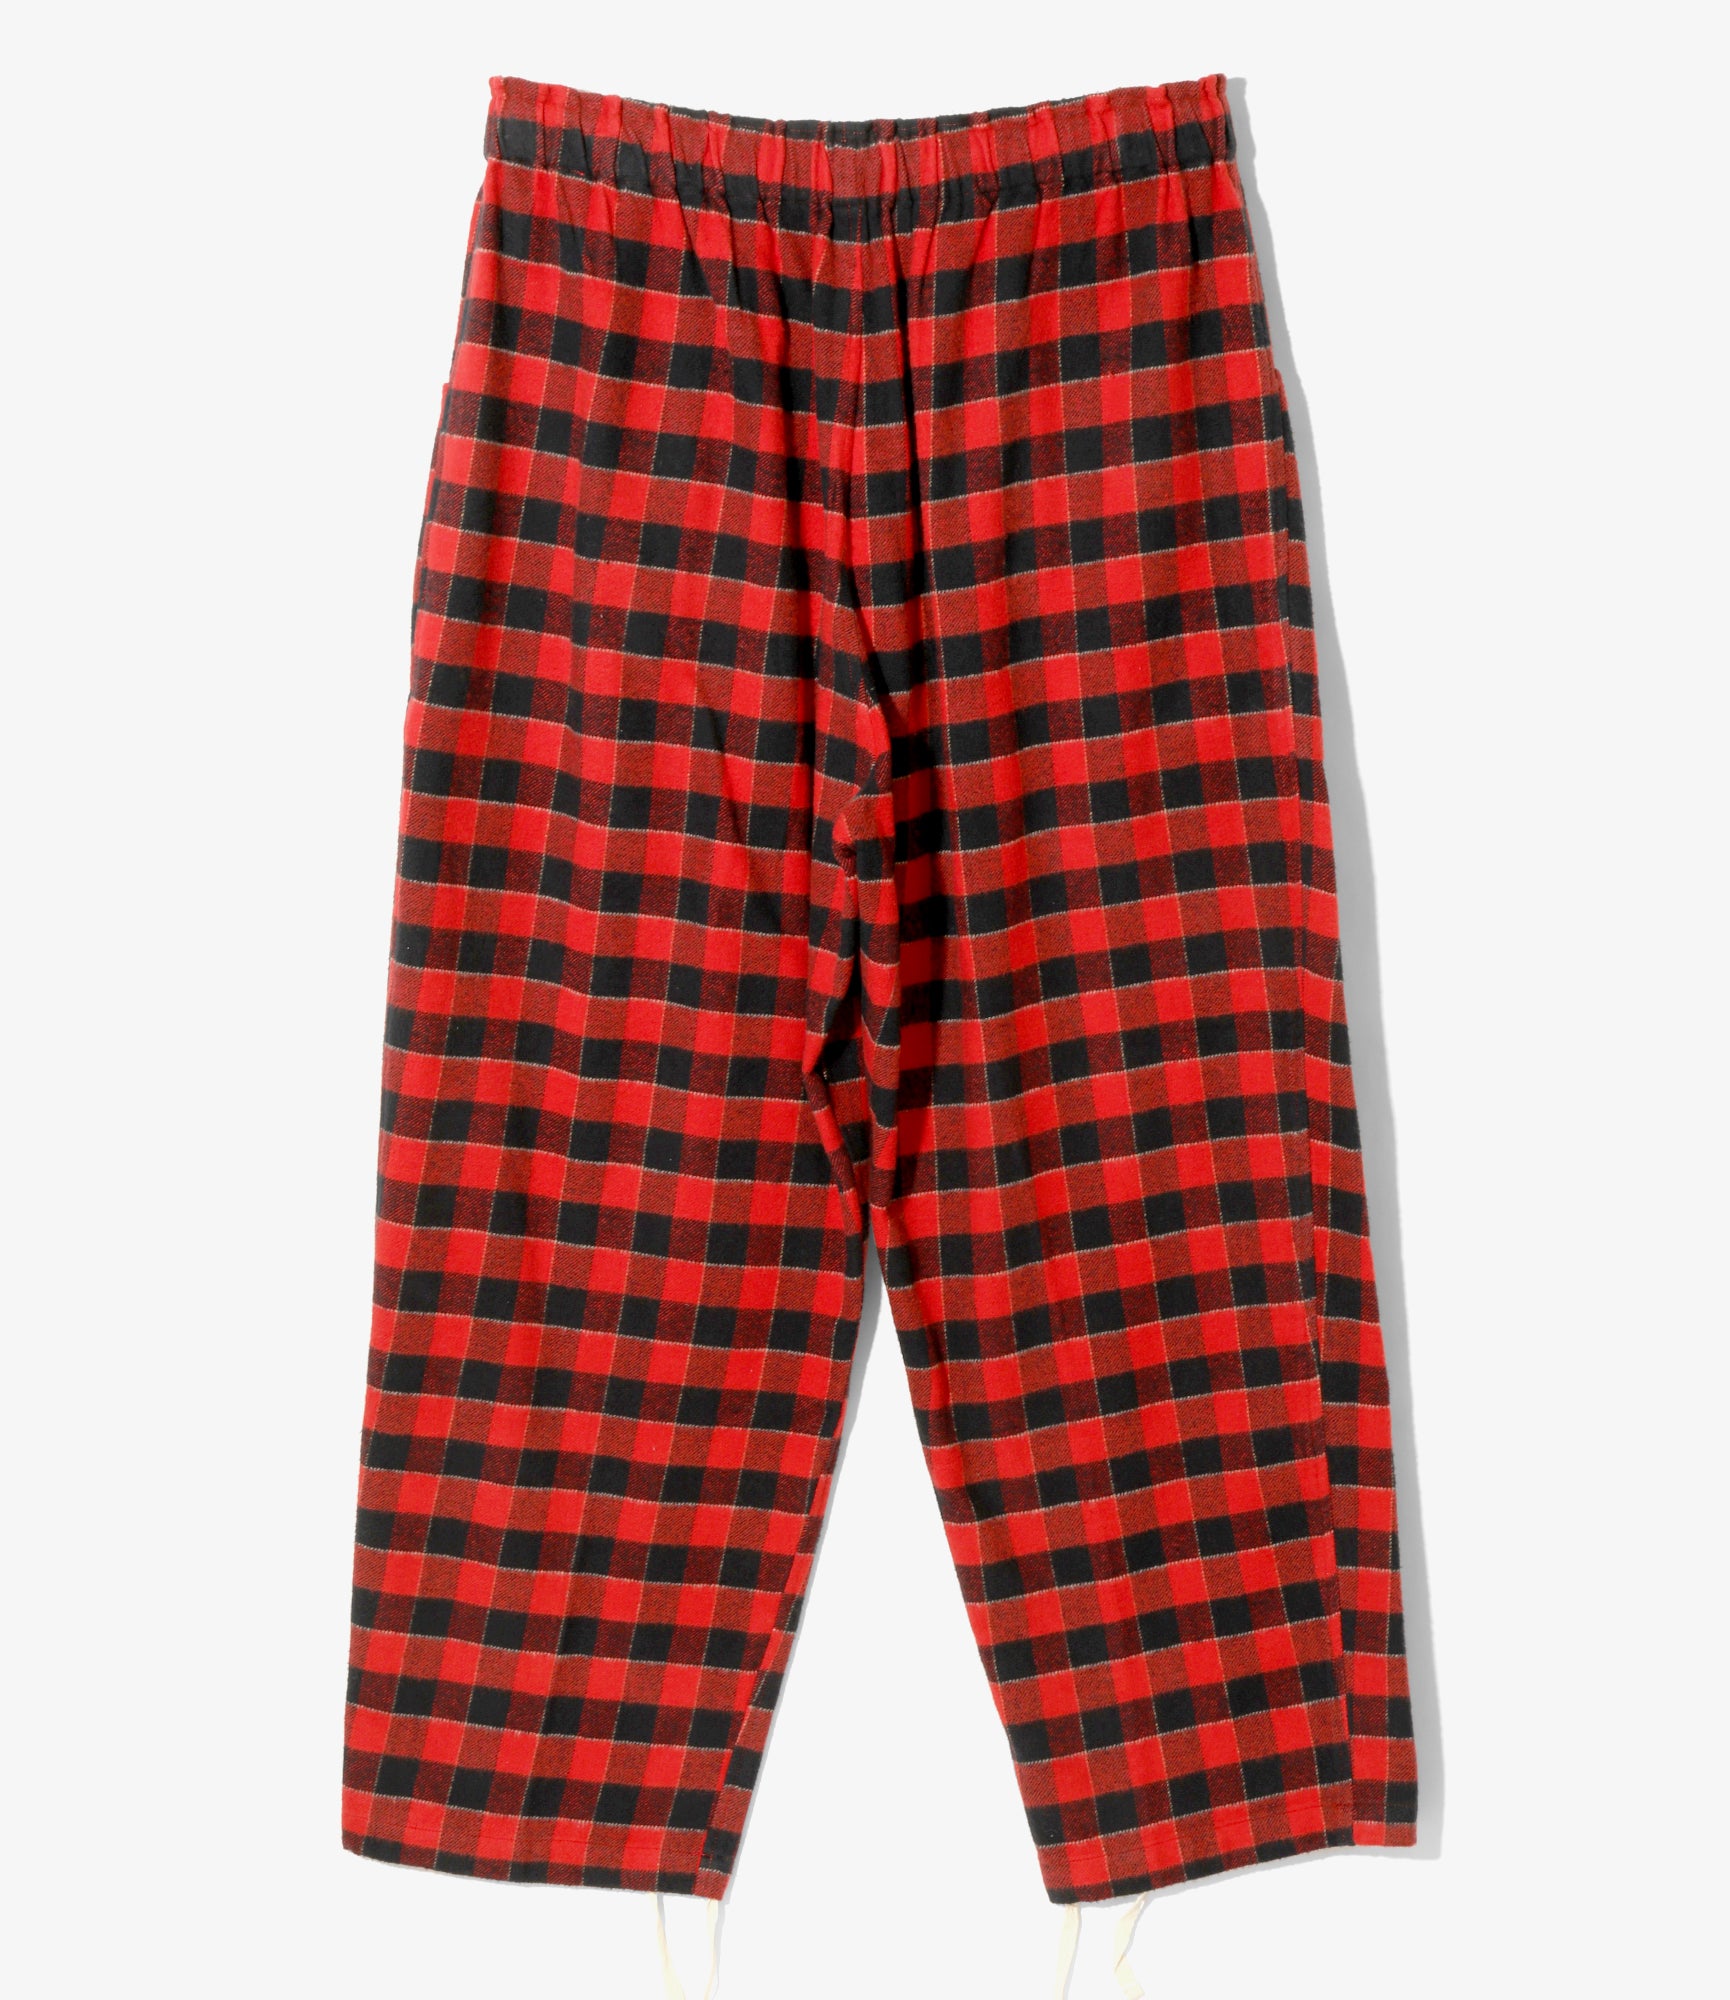 Army String Pant - Red / Black - Flannel Twill / Plaid